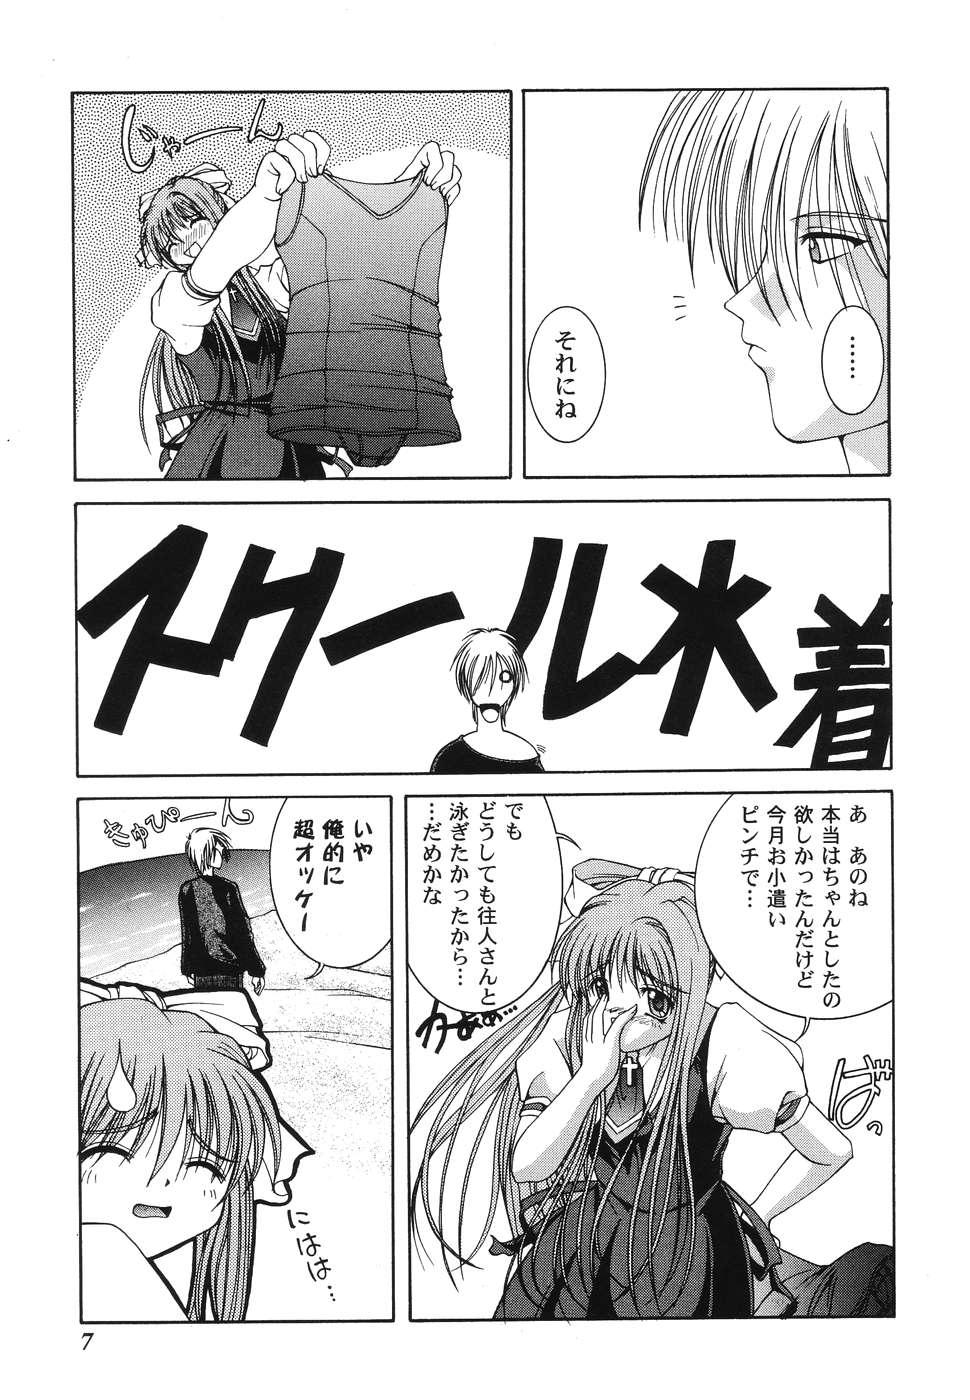 Transsexual Himitsu no Serenade 1 - Kanon Air Stripping - Page 7